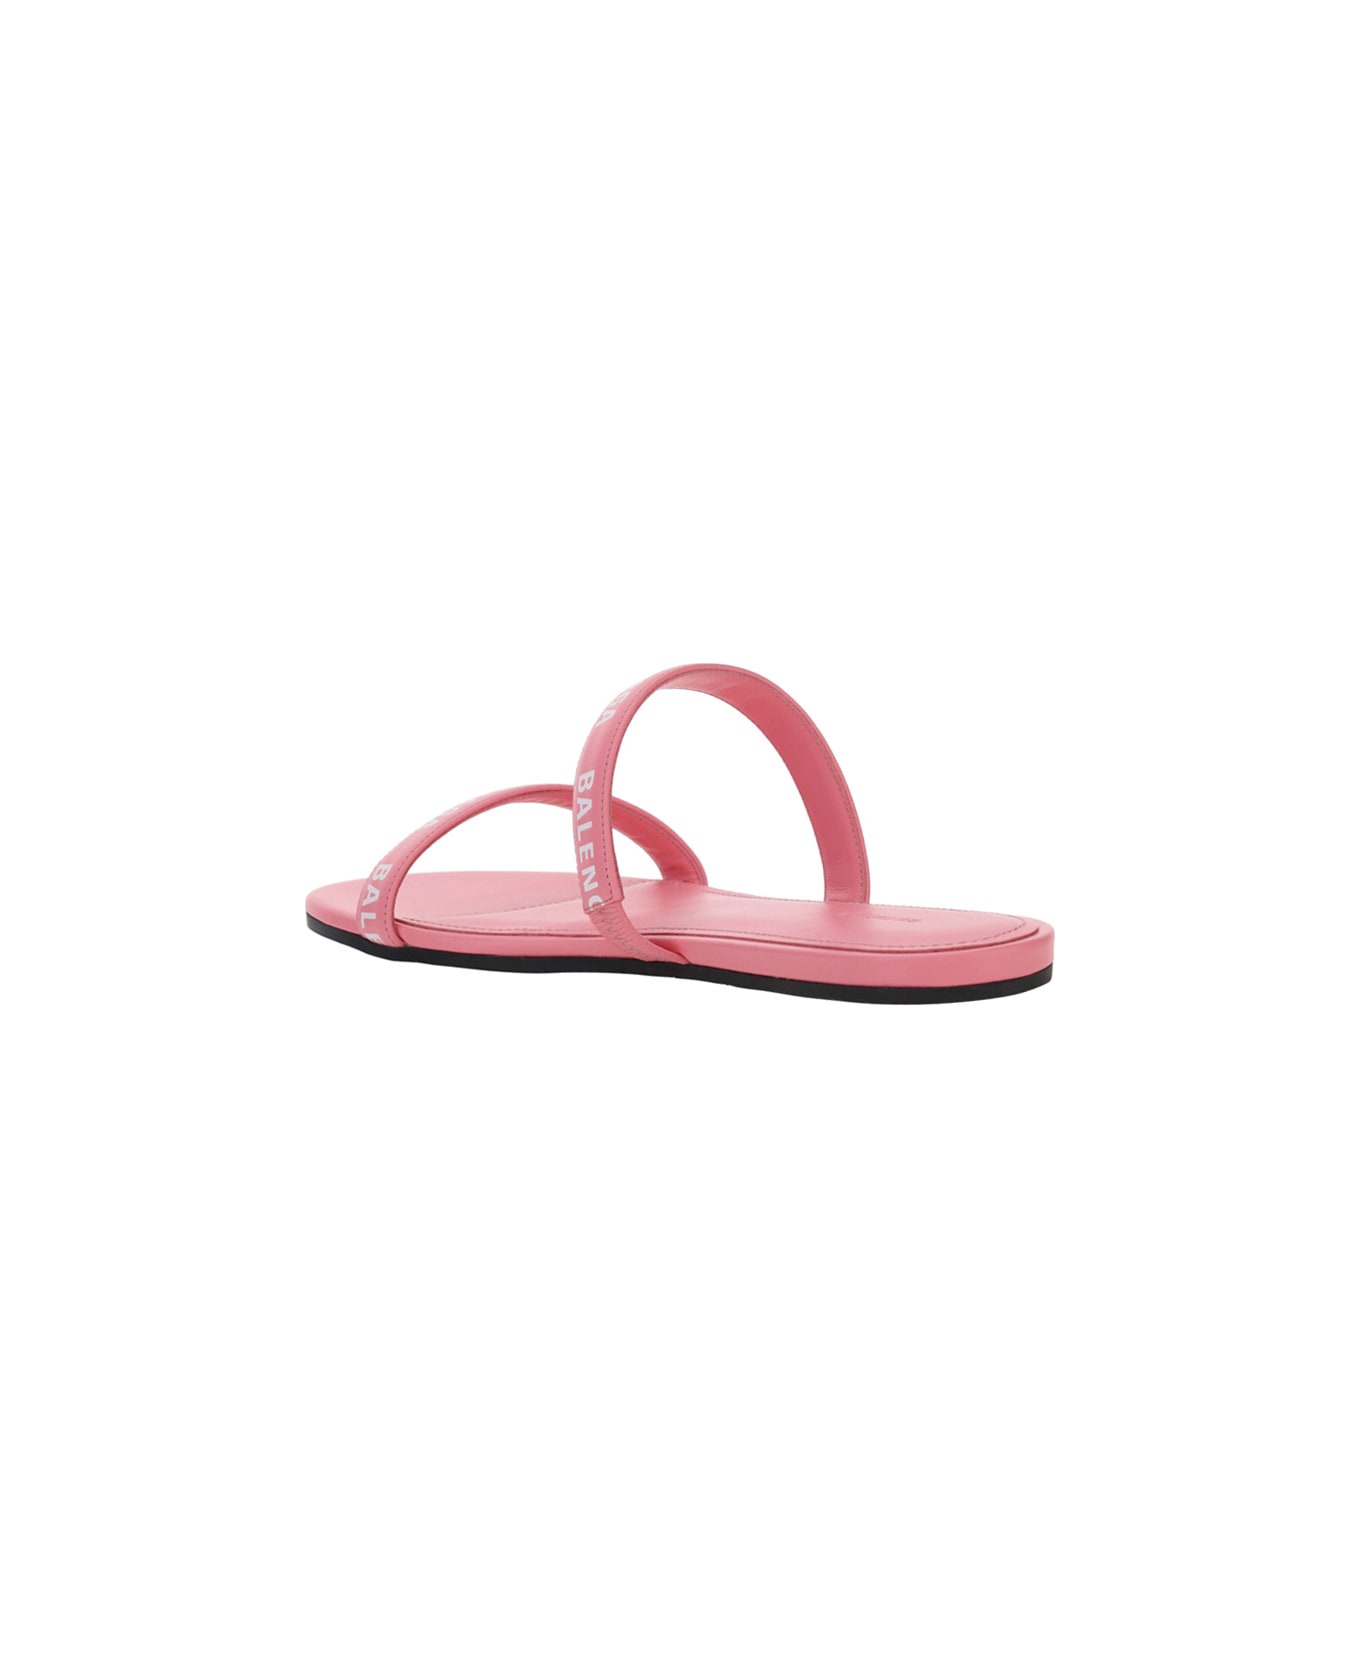 Balenciaga Round Sandal - Sweet pink/white